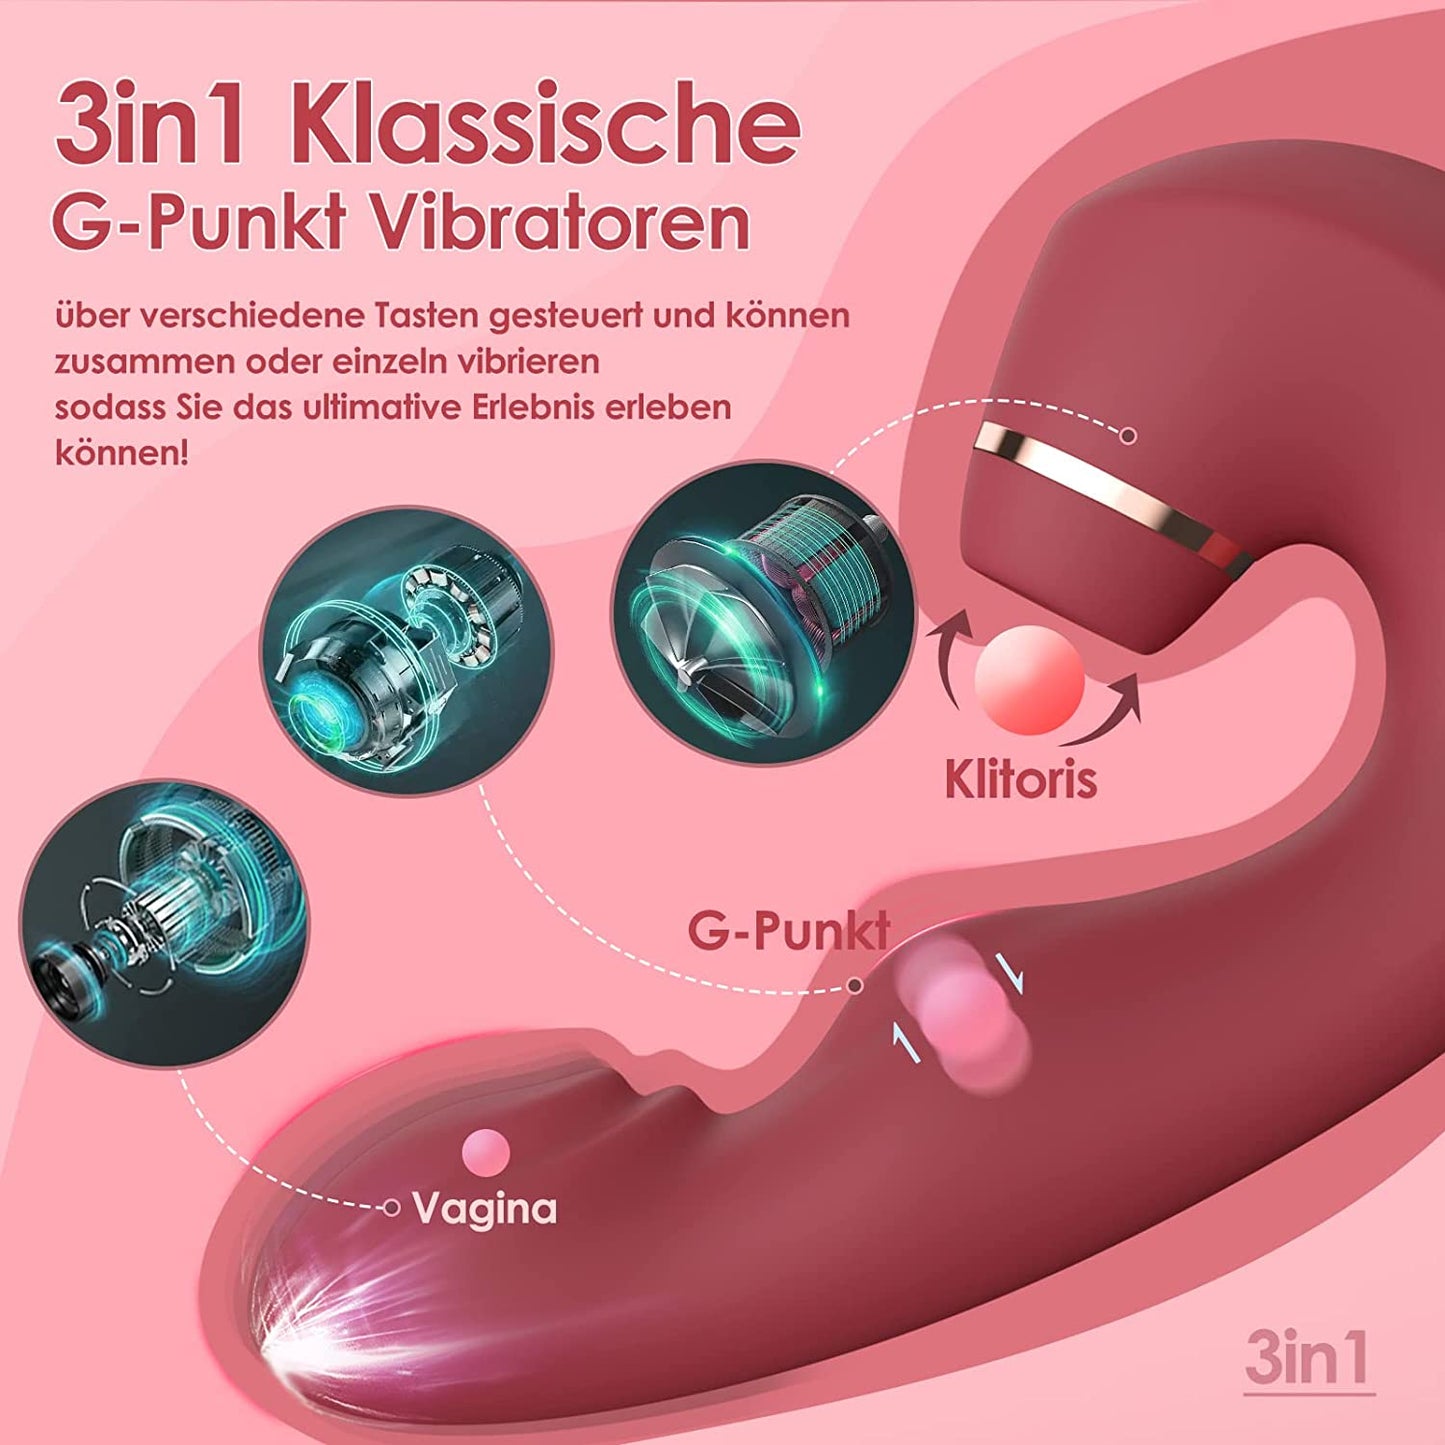 10 Vibrationsmodi 5 Pulsationsmodi und 5 Leckmodi Klitoris G-Punkt Vibrator für Sie